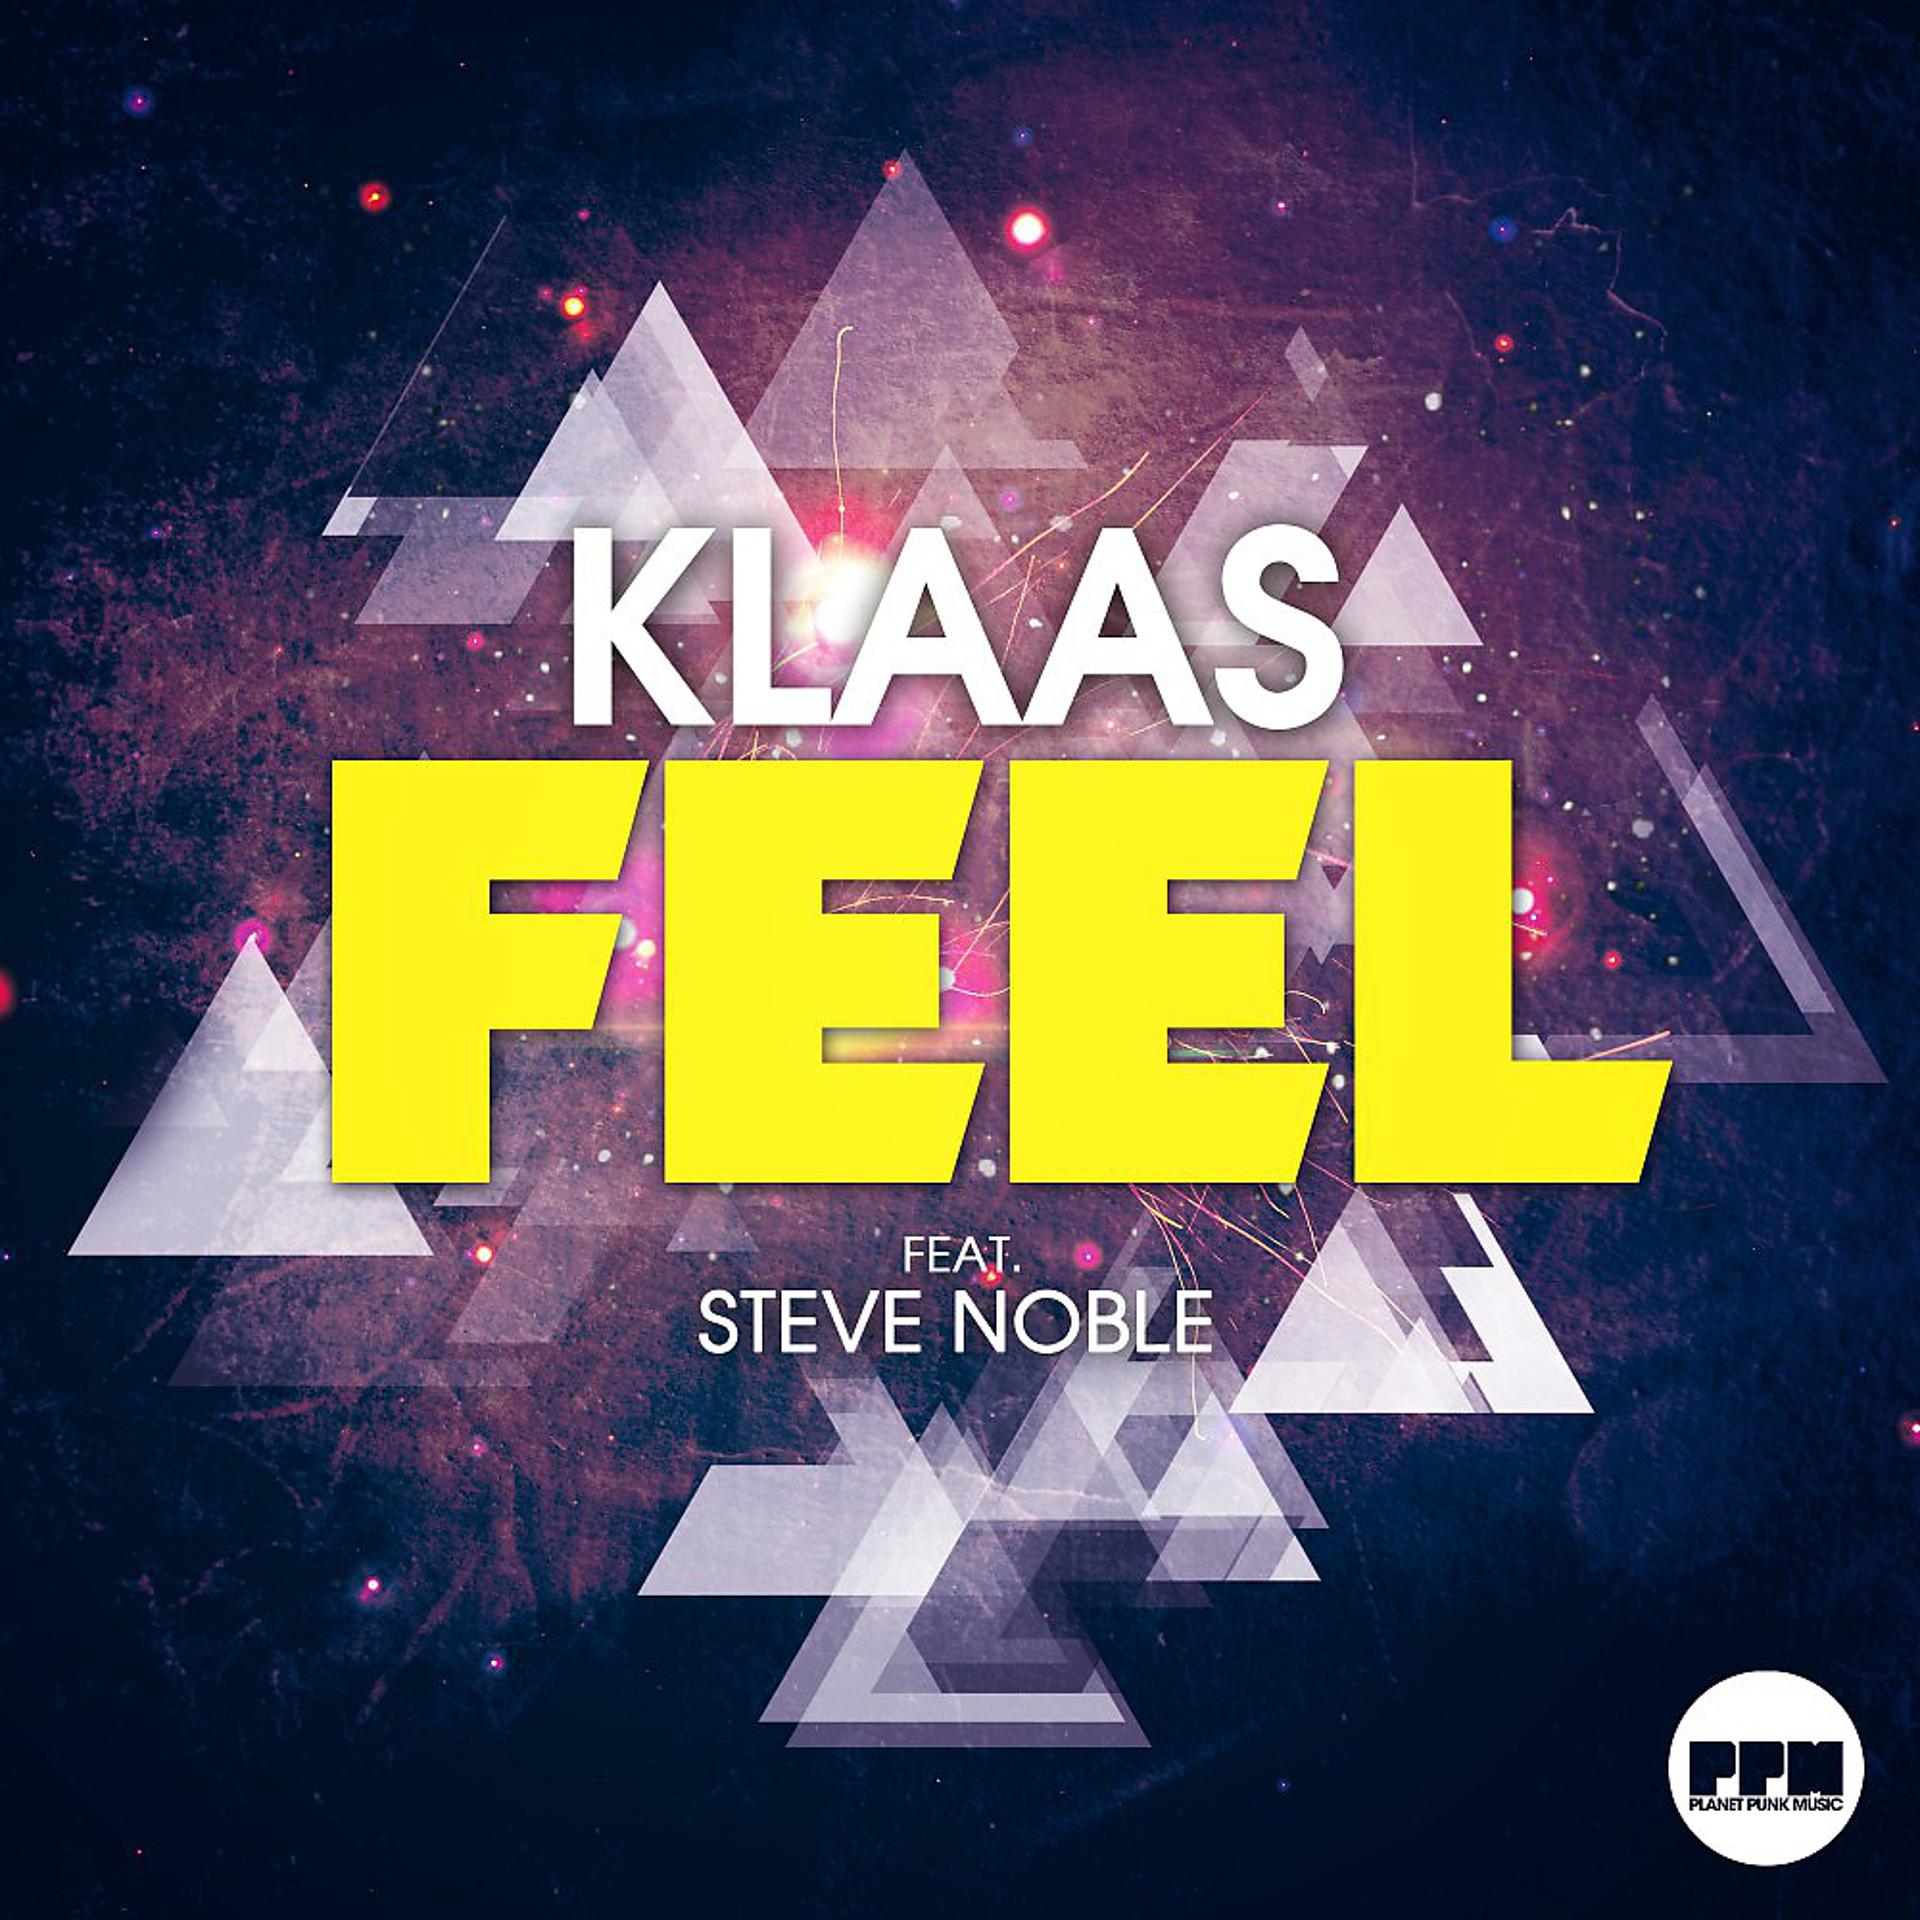 Feel ft. Klaas. Feat Steve. Klaas mp3. Klaas - Gravity.